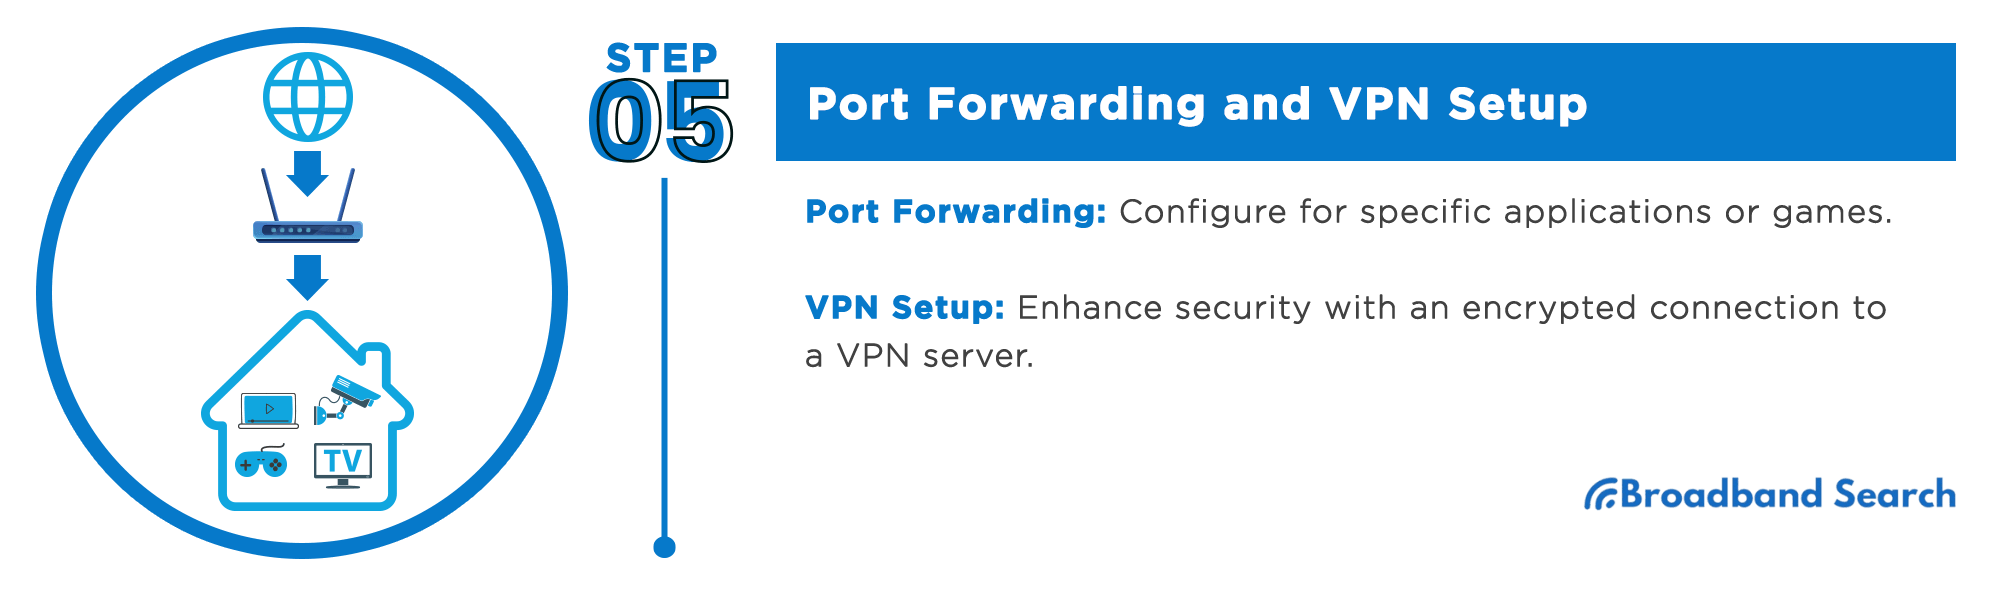 Description on what is port forwarding and VPN setup